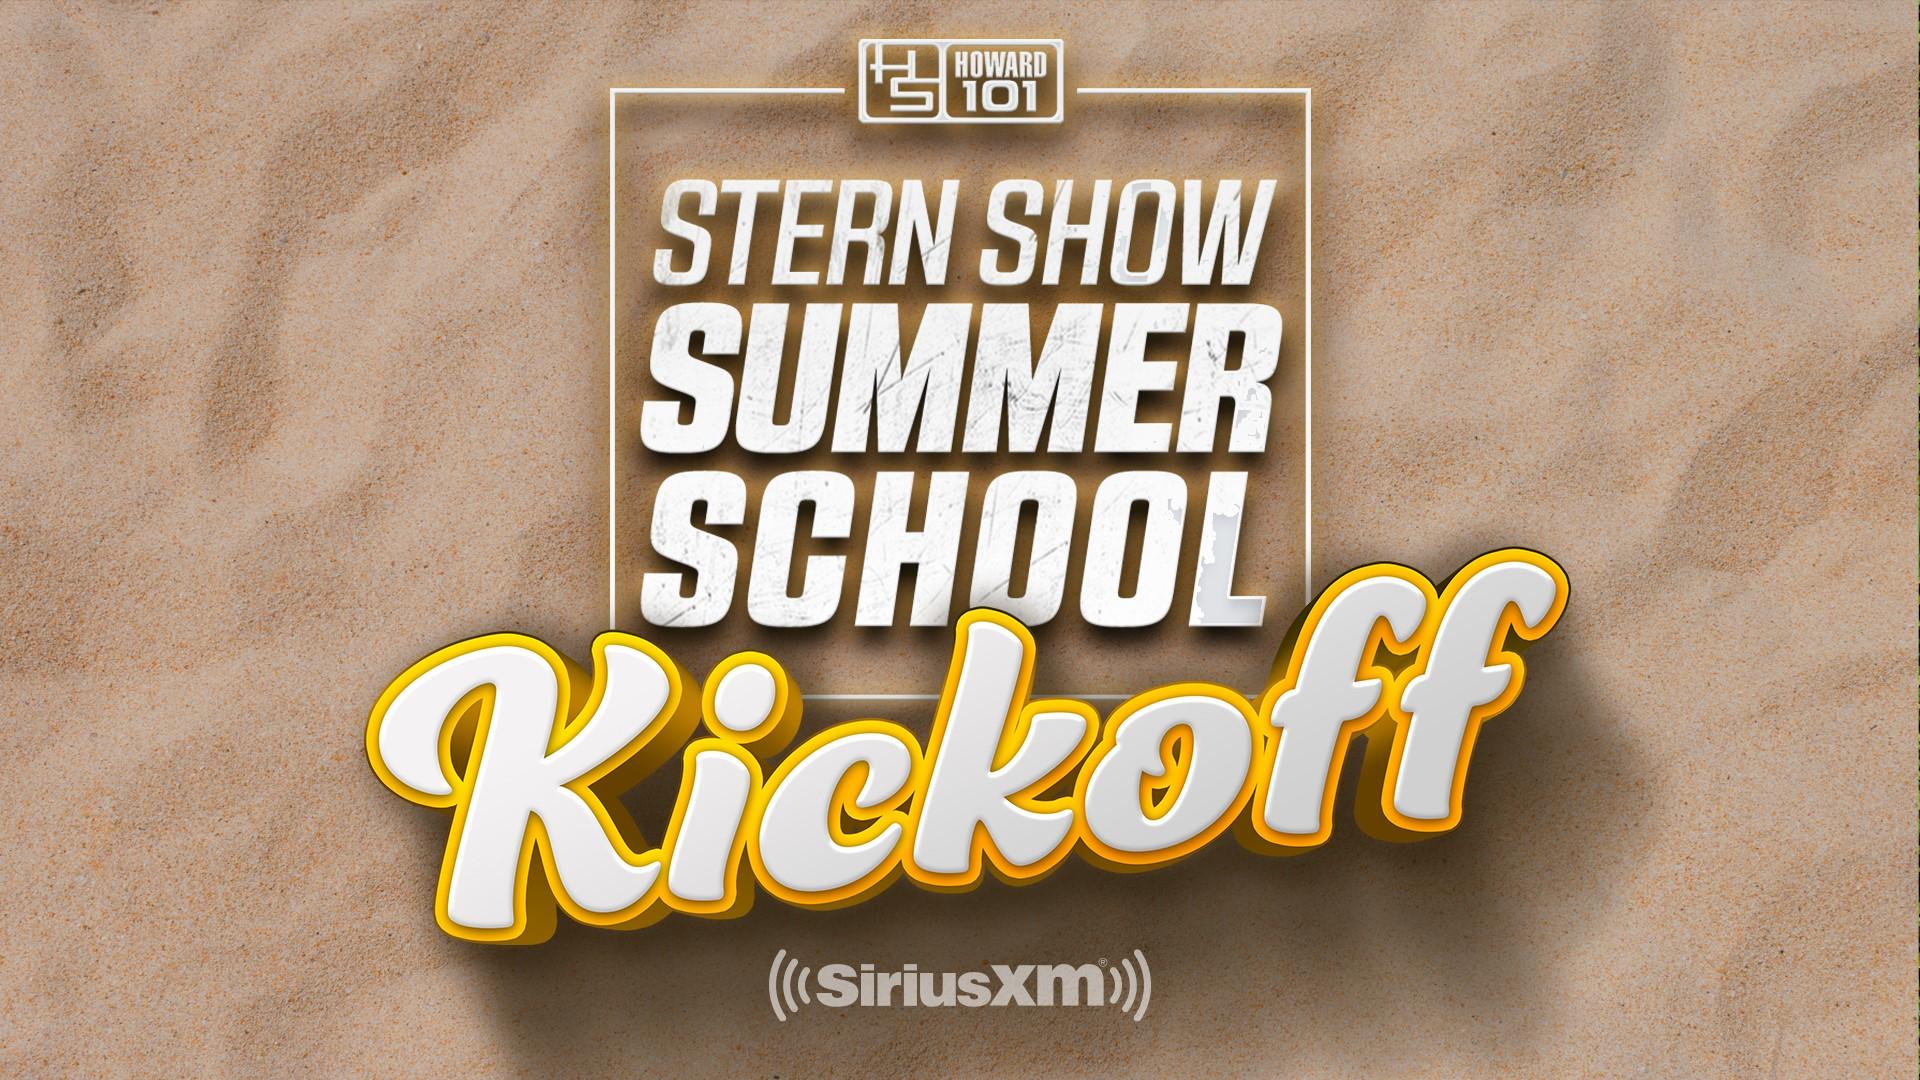 Summer Kickoff, Howard 101, Stern Show